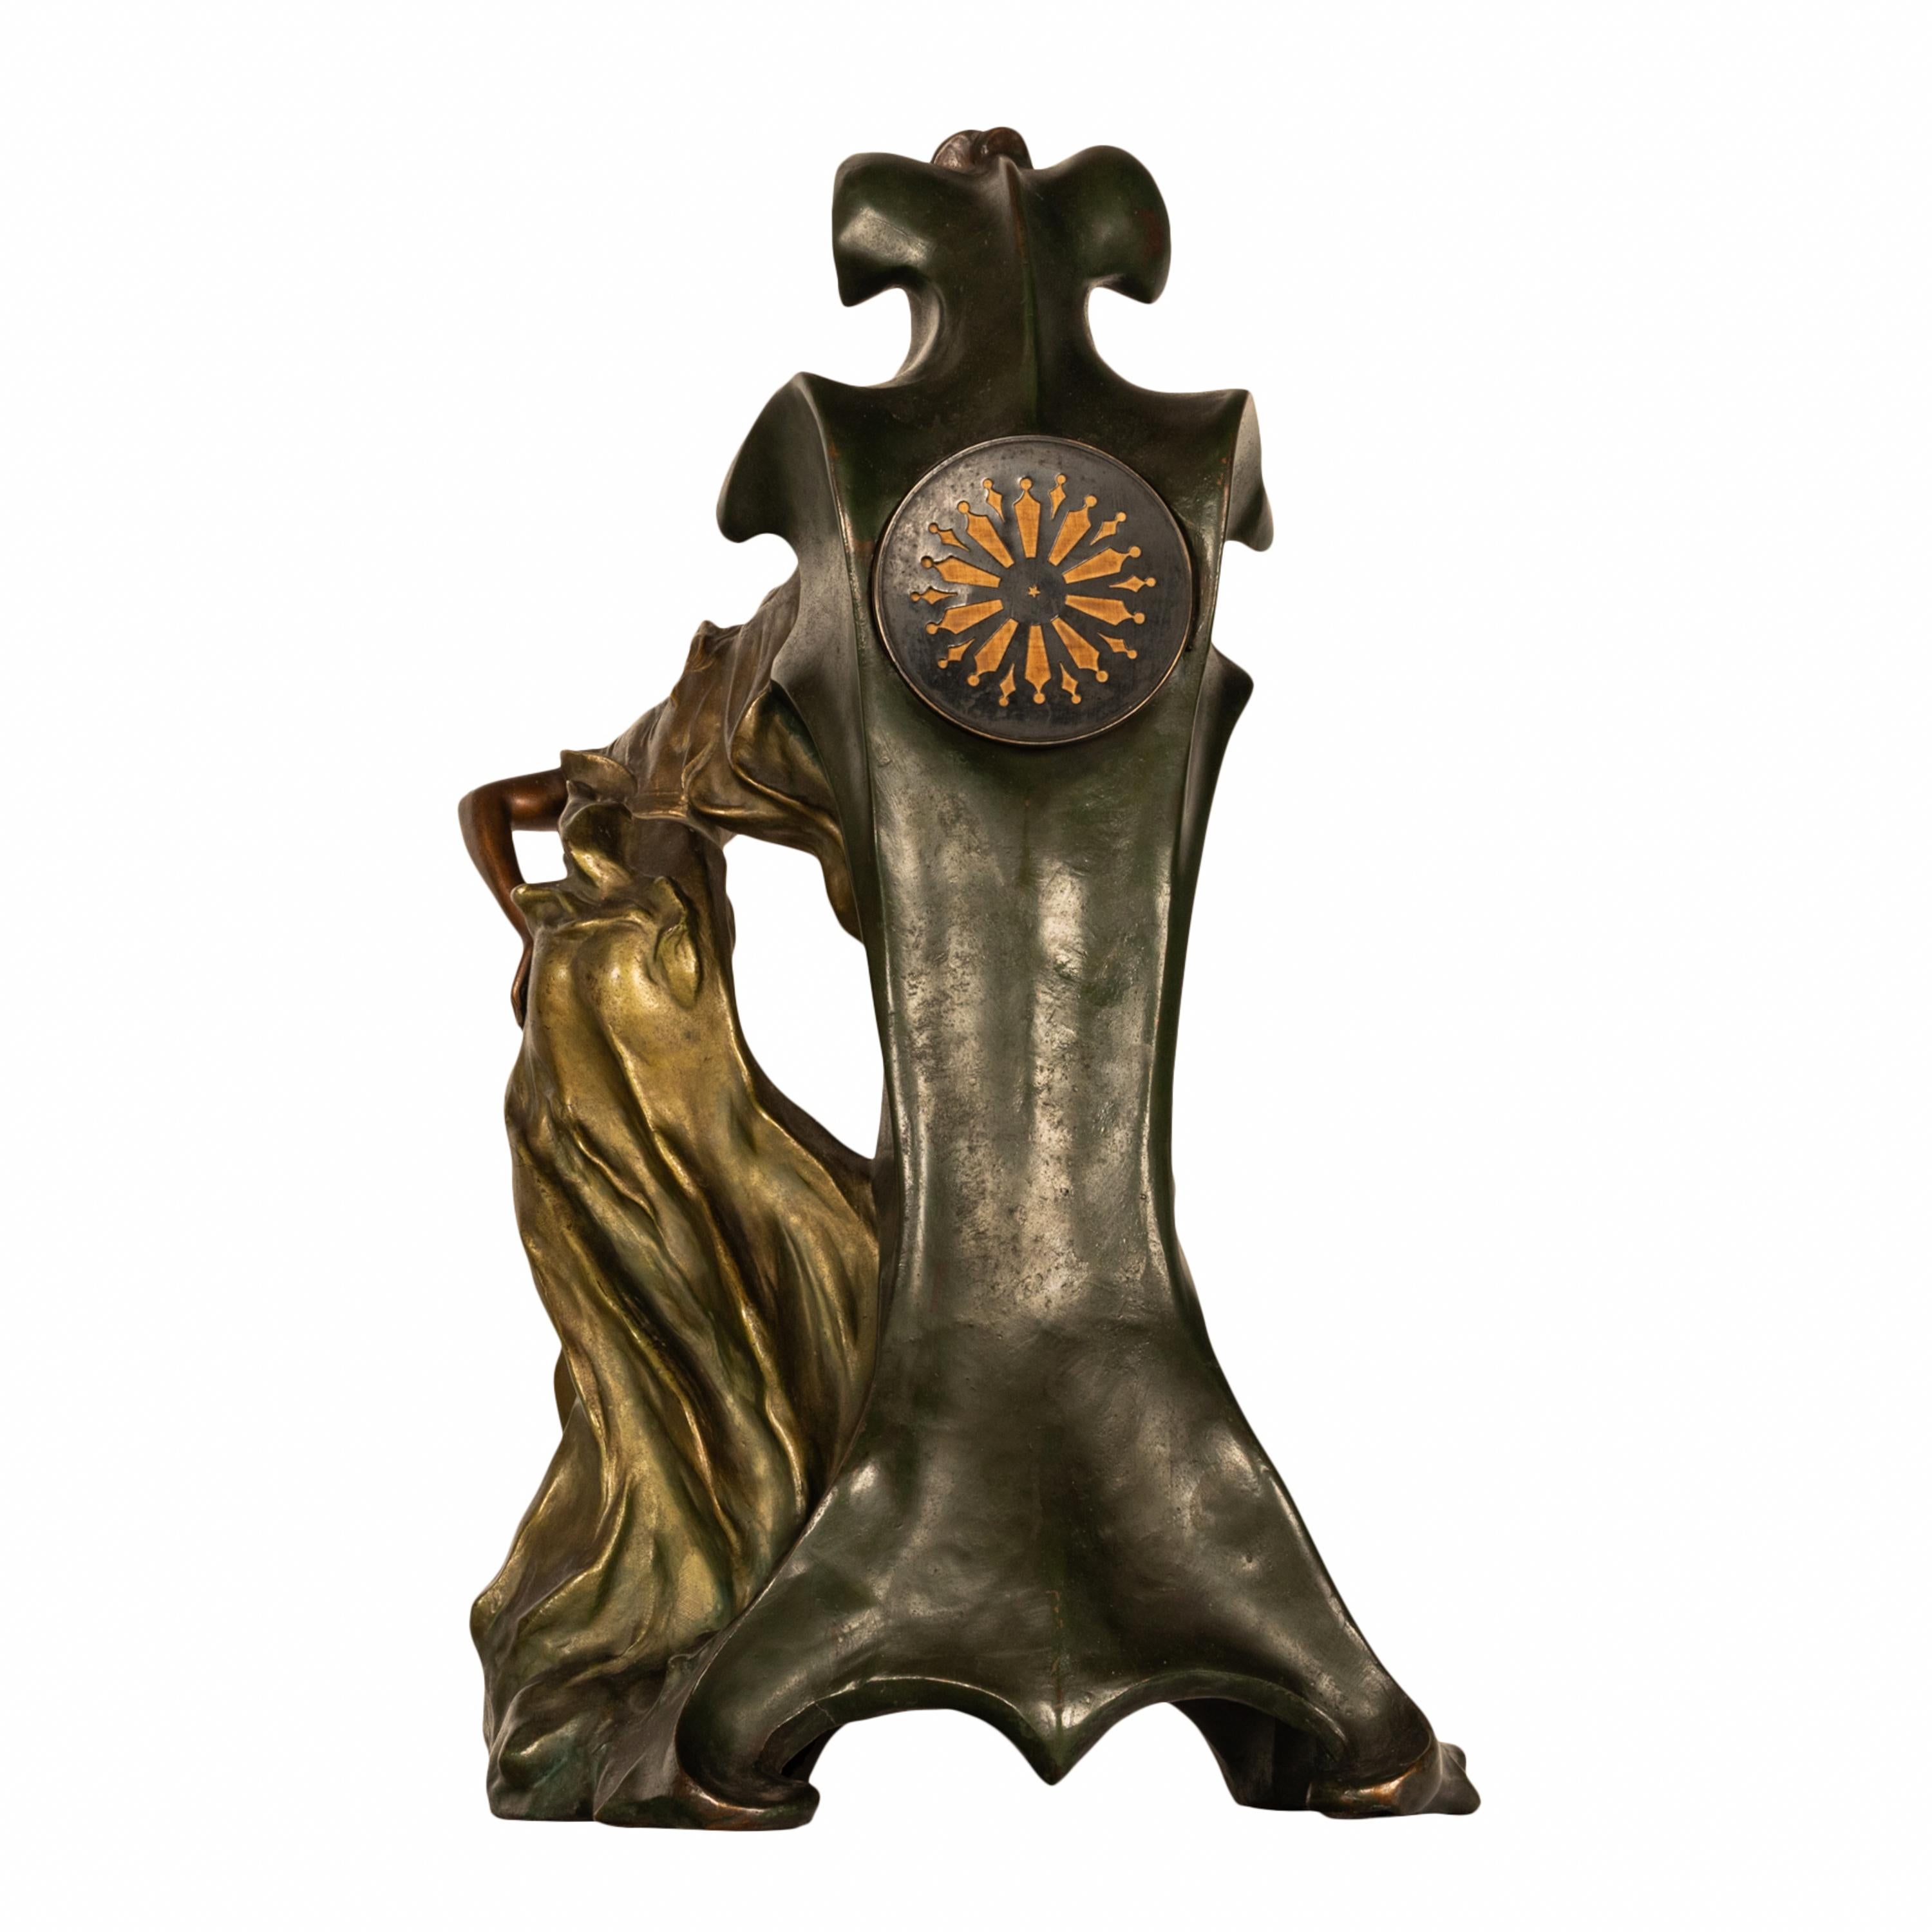 Antique French Art Nouveau Cold-Painted Bronze Figural Statue 8 Day Clock 1900 For Sale 2